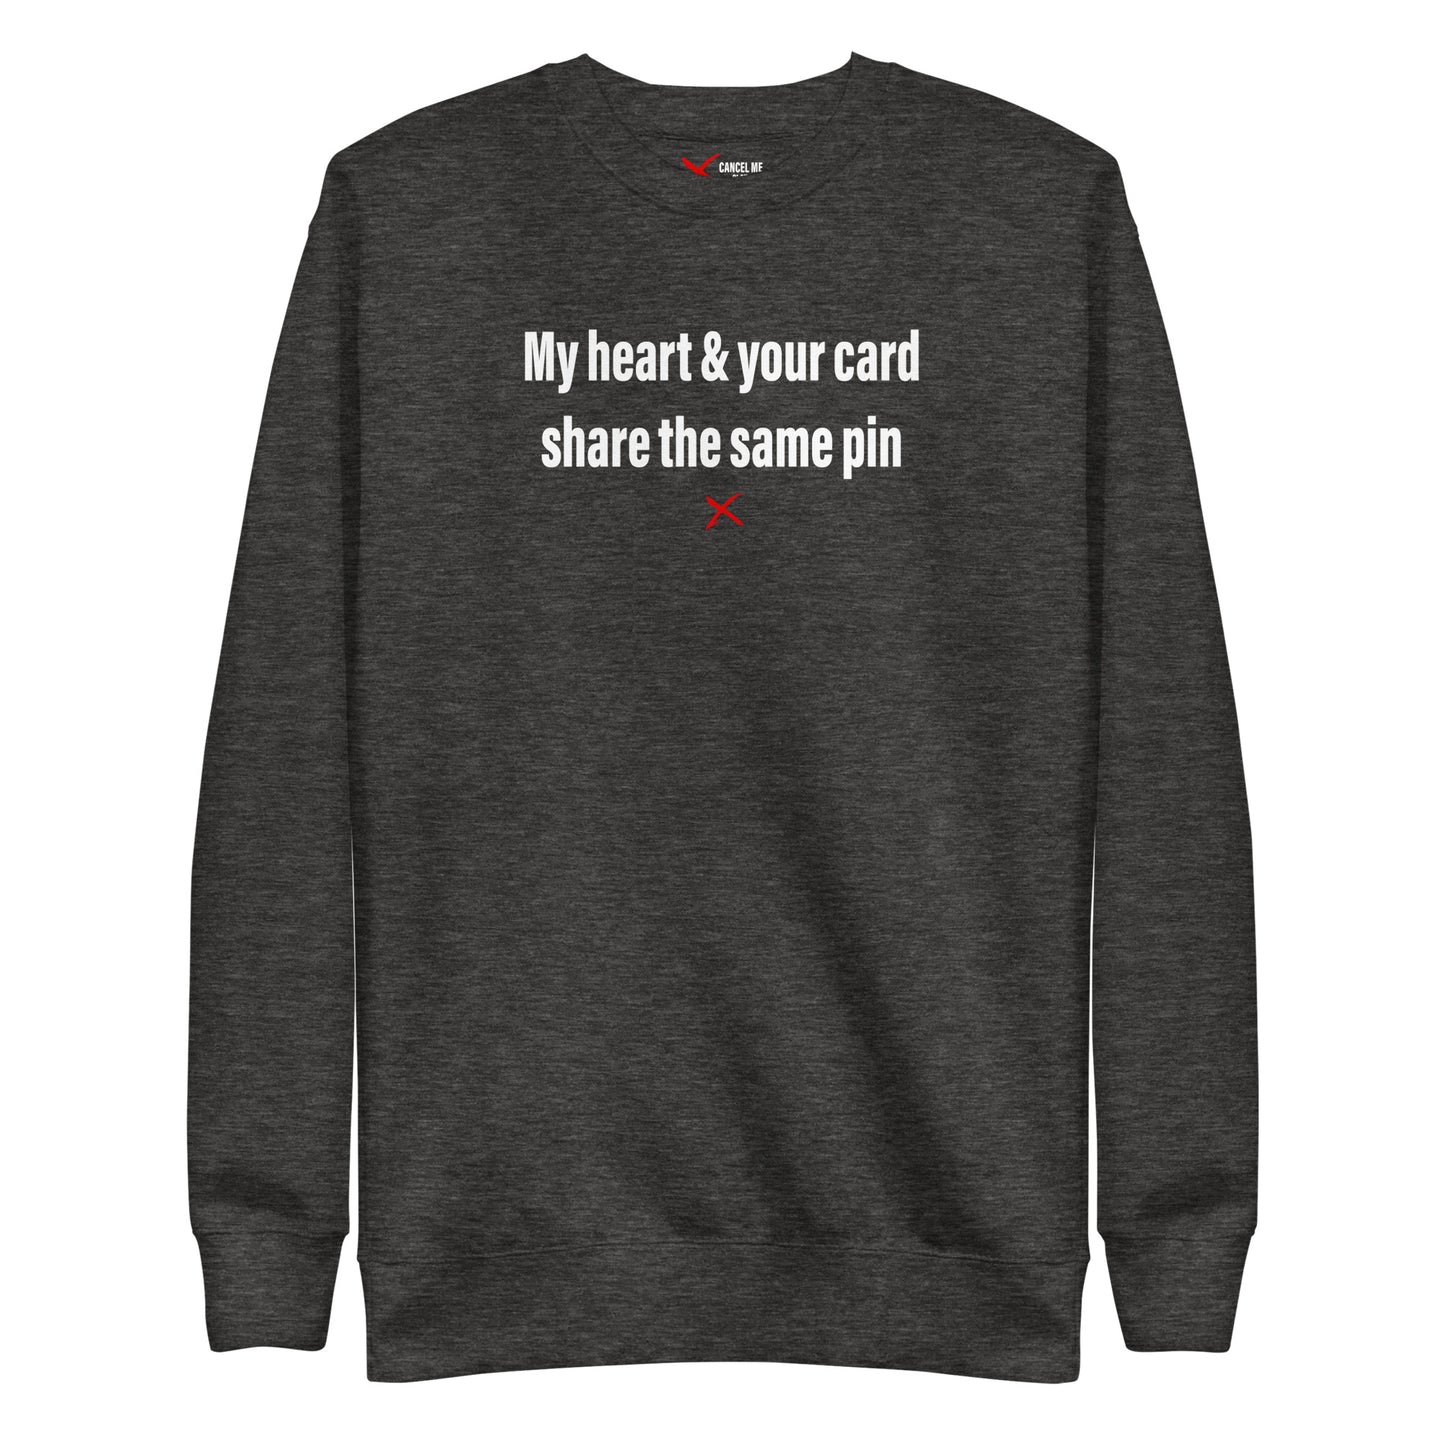 My heart & your card share the same pin - Sweatshirt